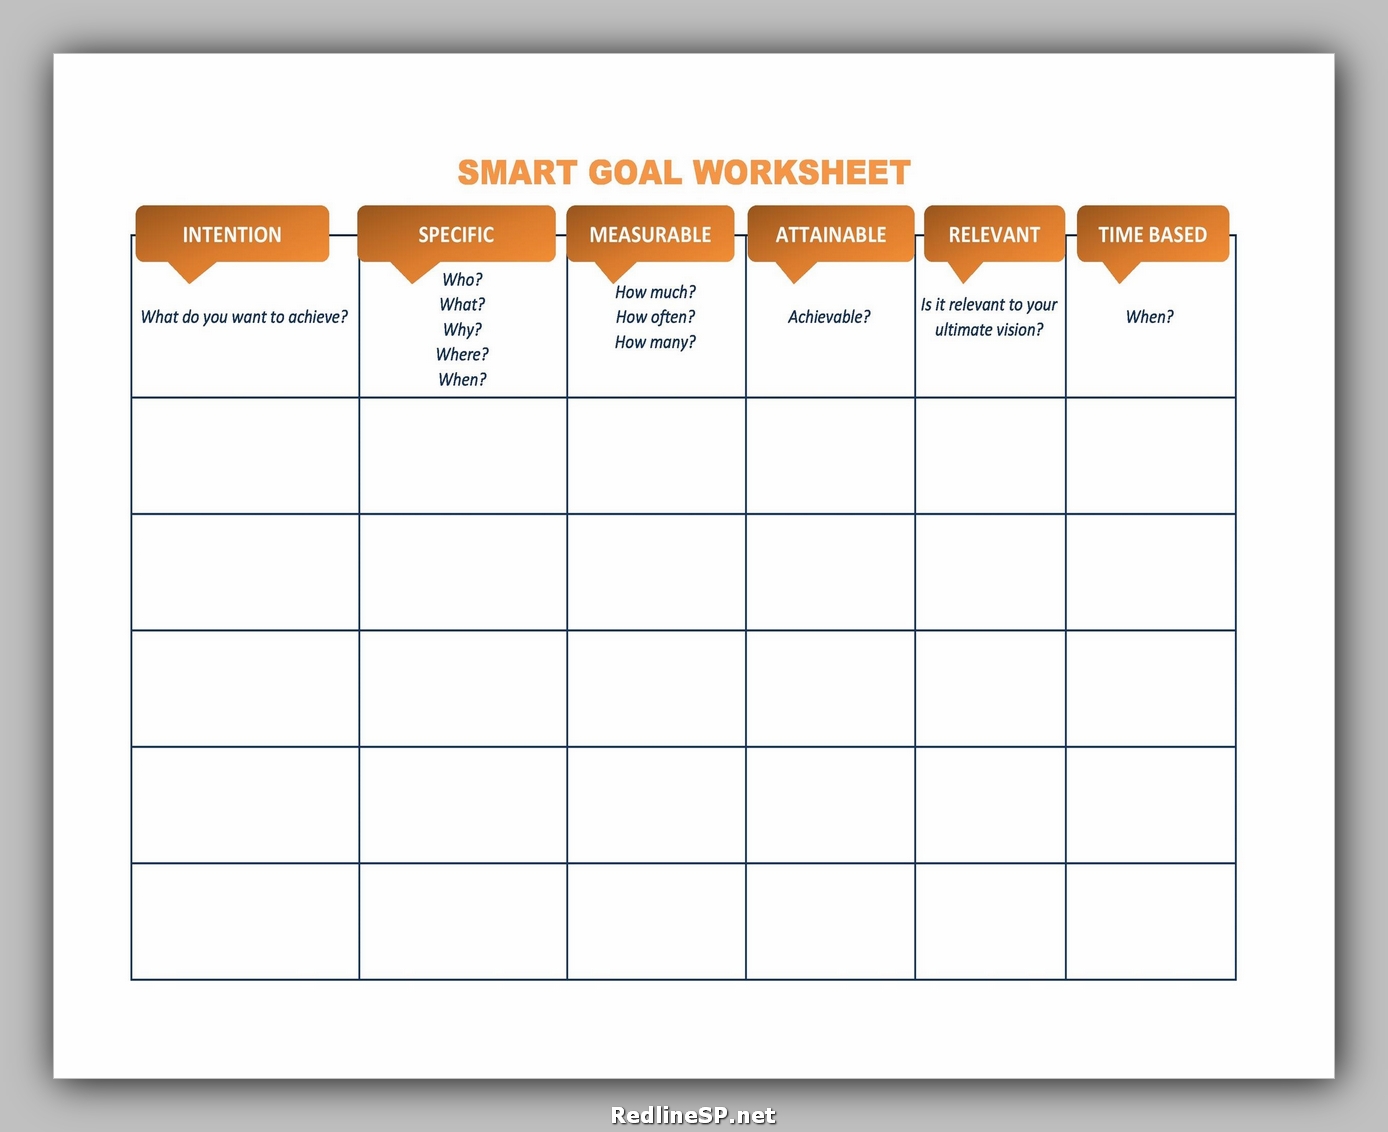 50-smart-goals-template-excel-word-pdf-redlinesp